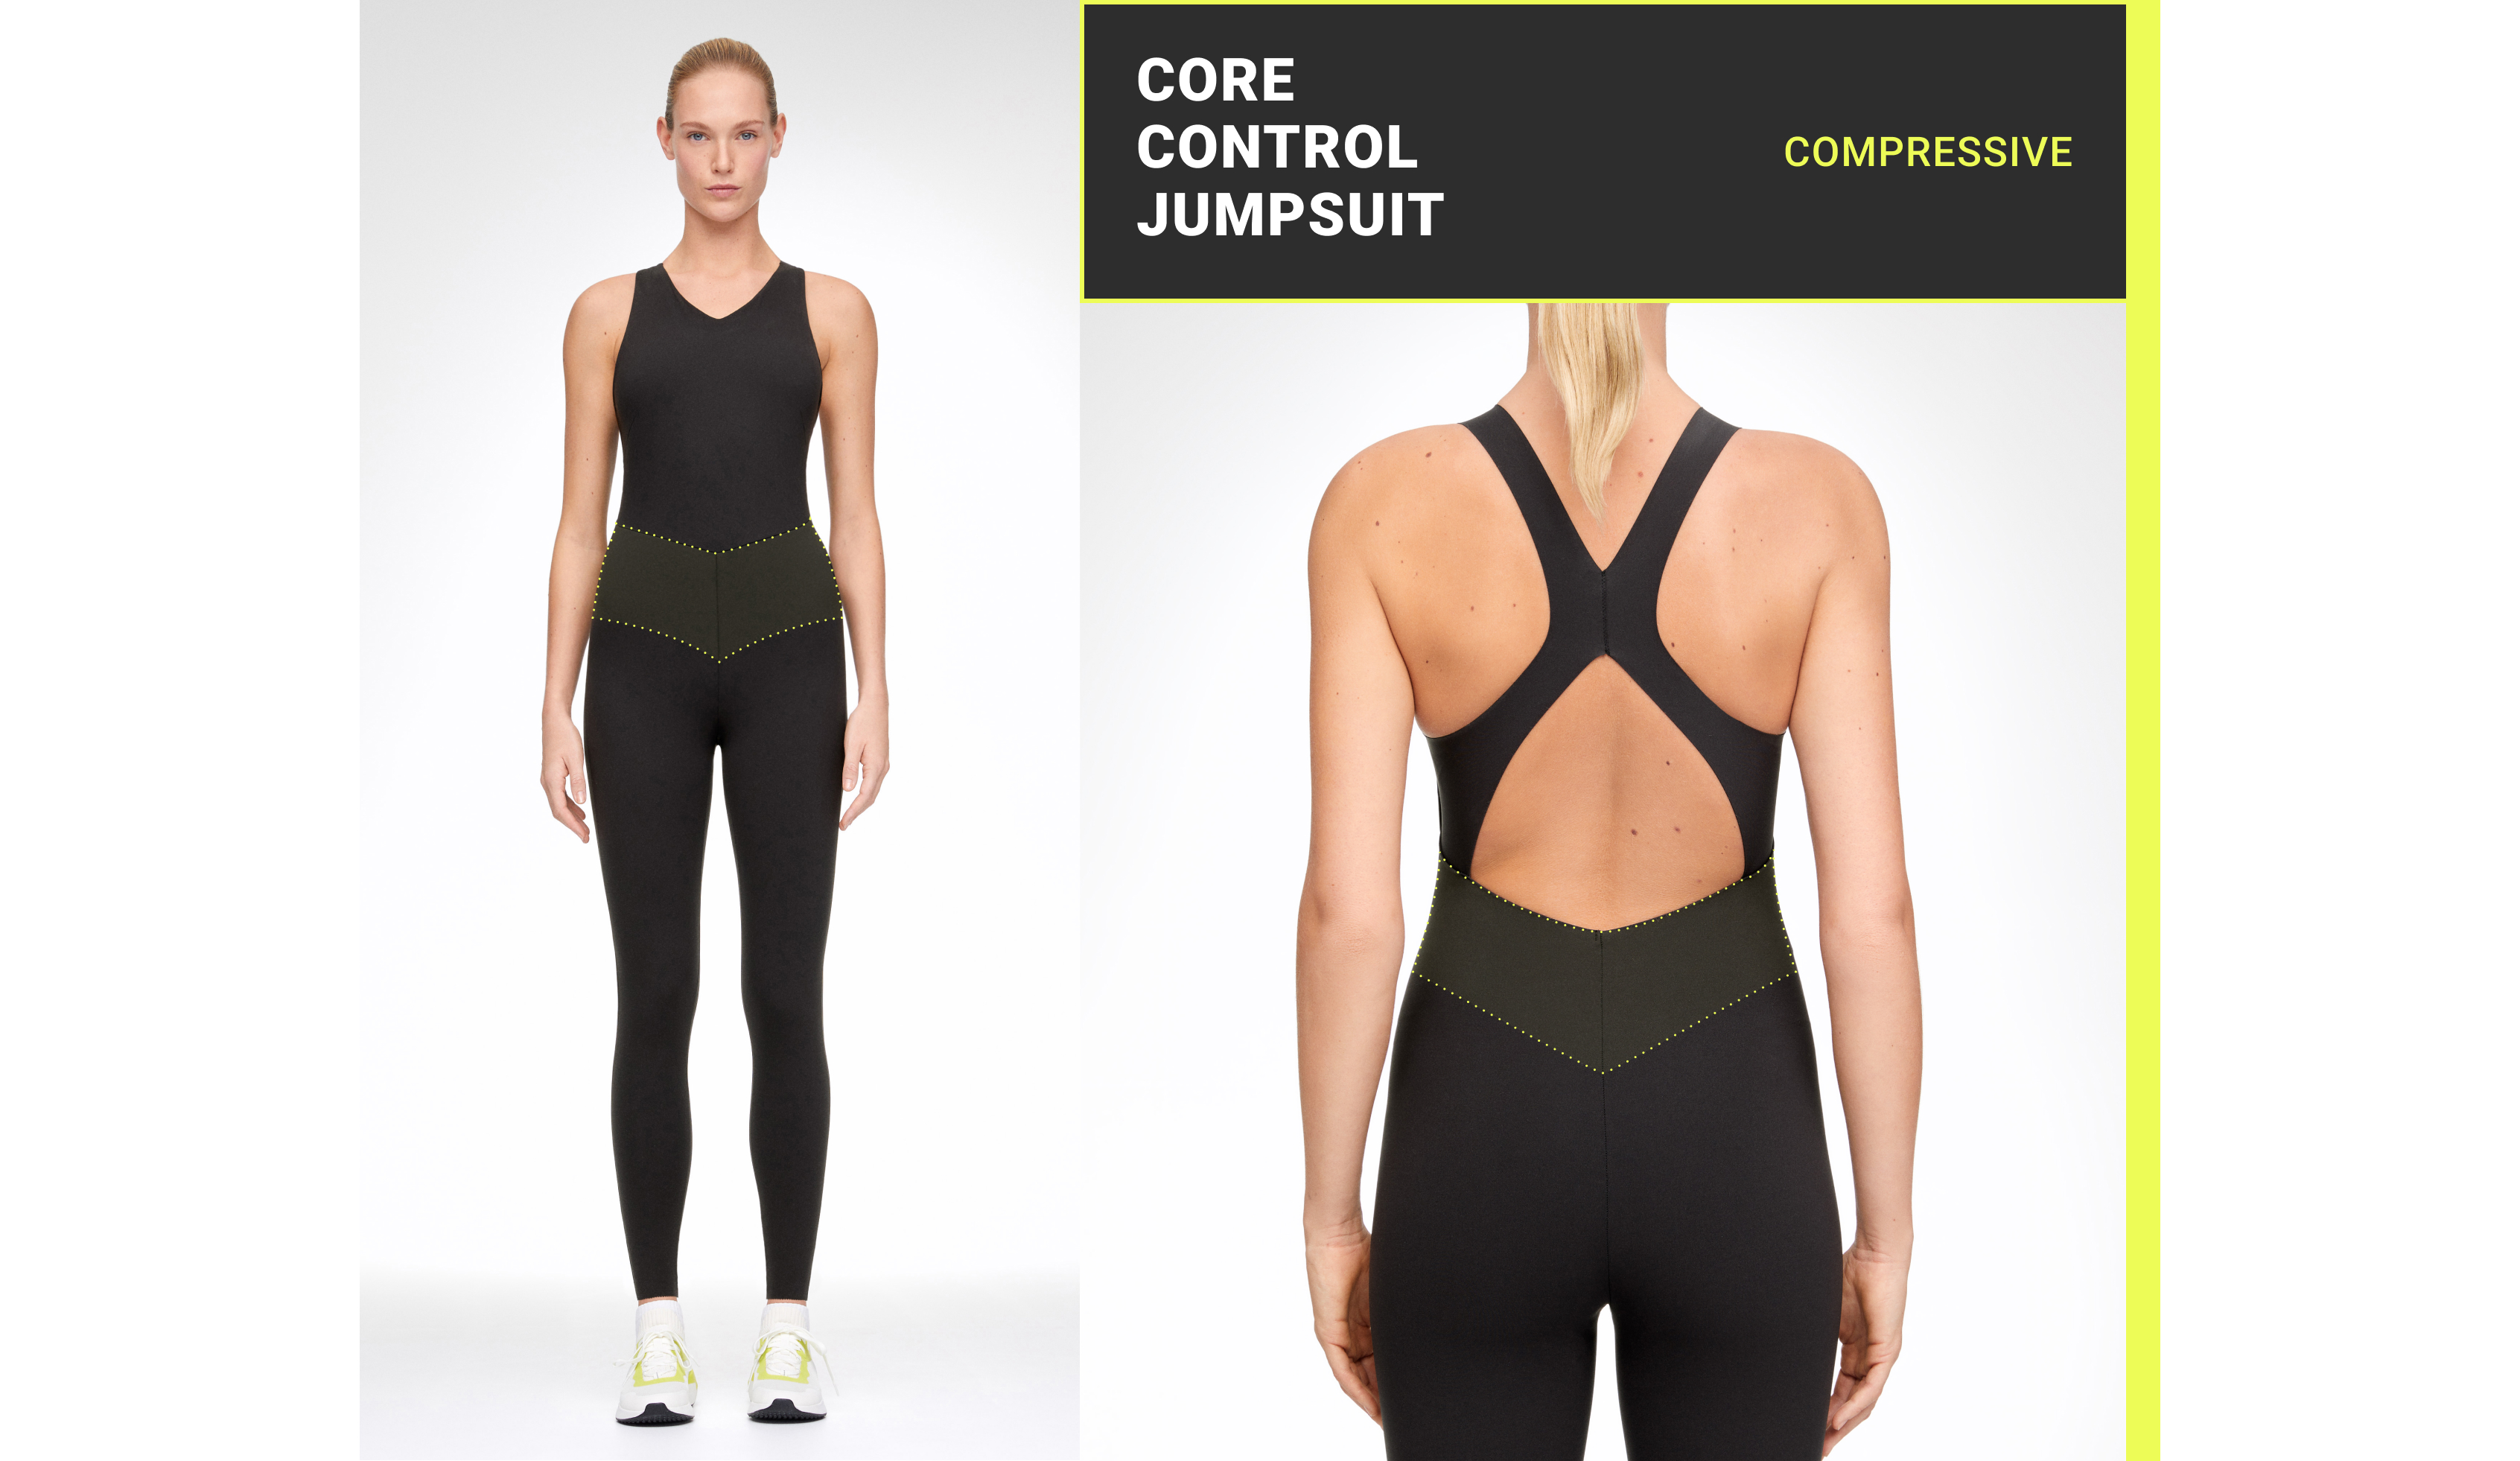 Core control compressive jumpsuit